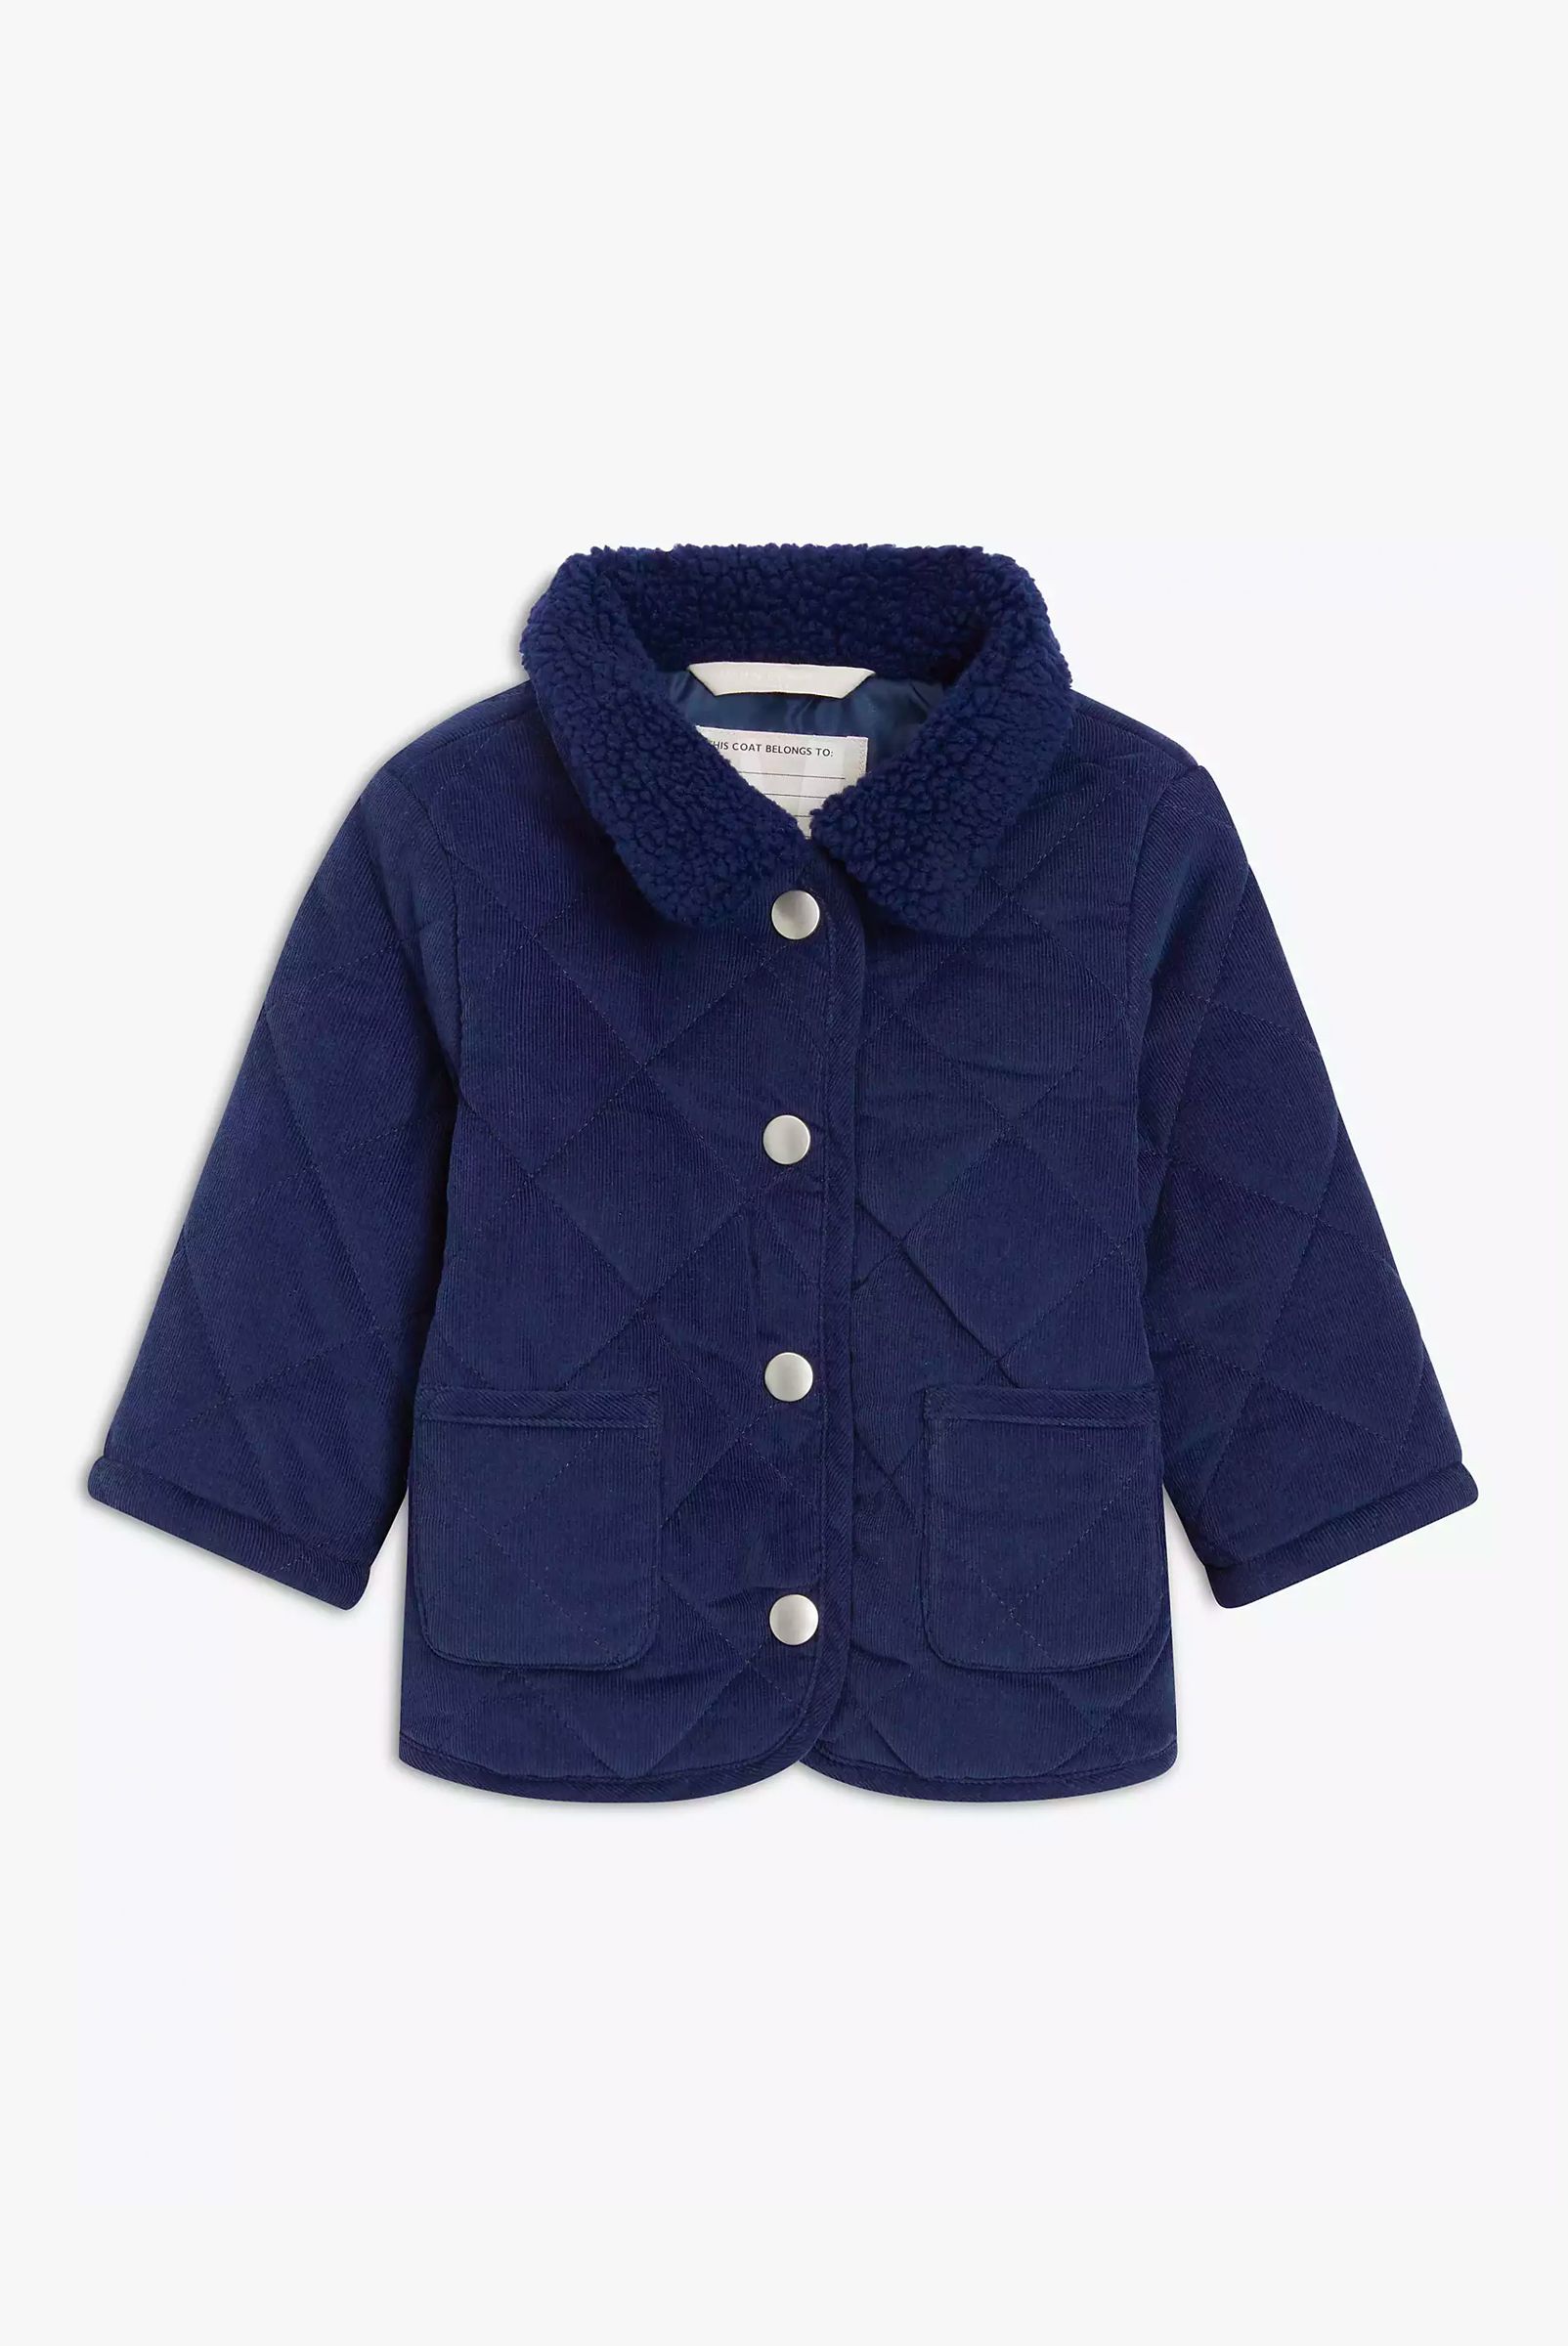 John Lewis Baby Needle Cord Quilt Jacket, Navy, £26.00 - £28.00